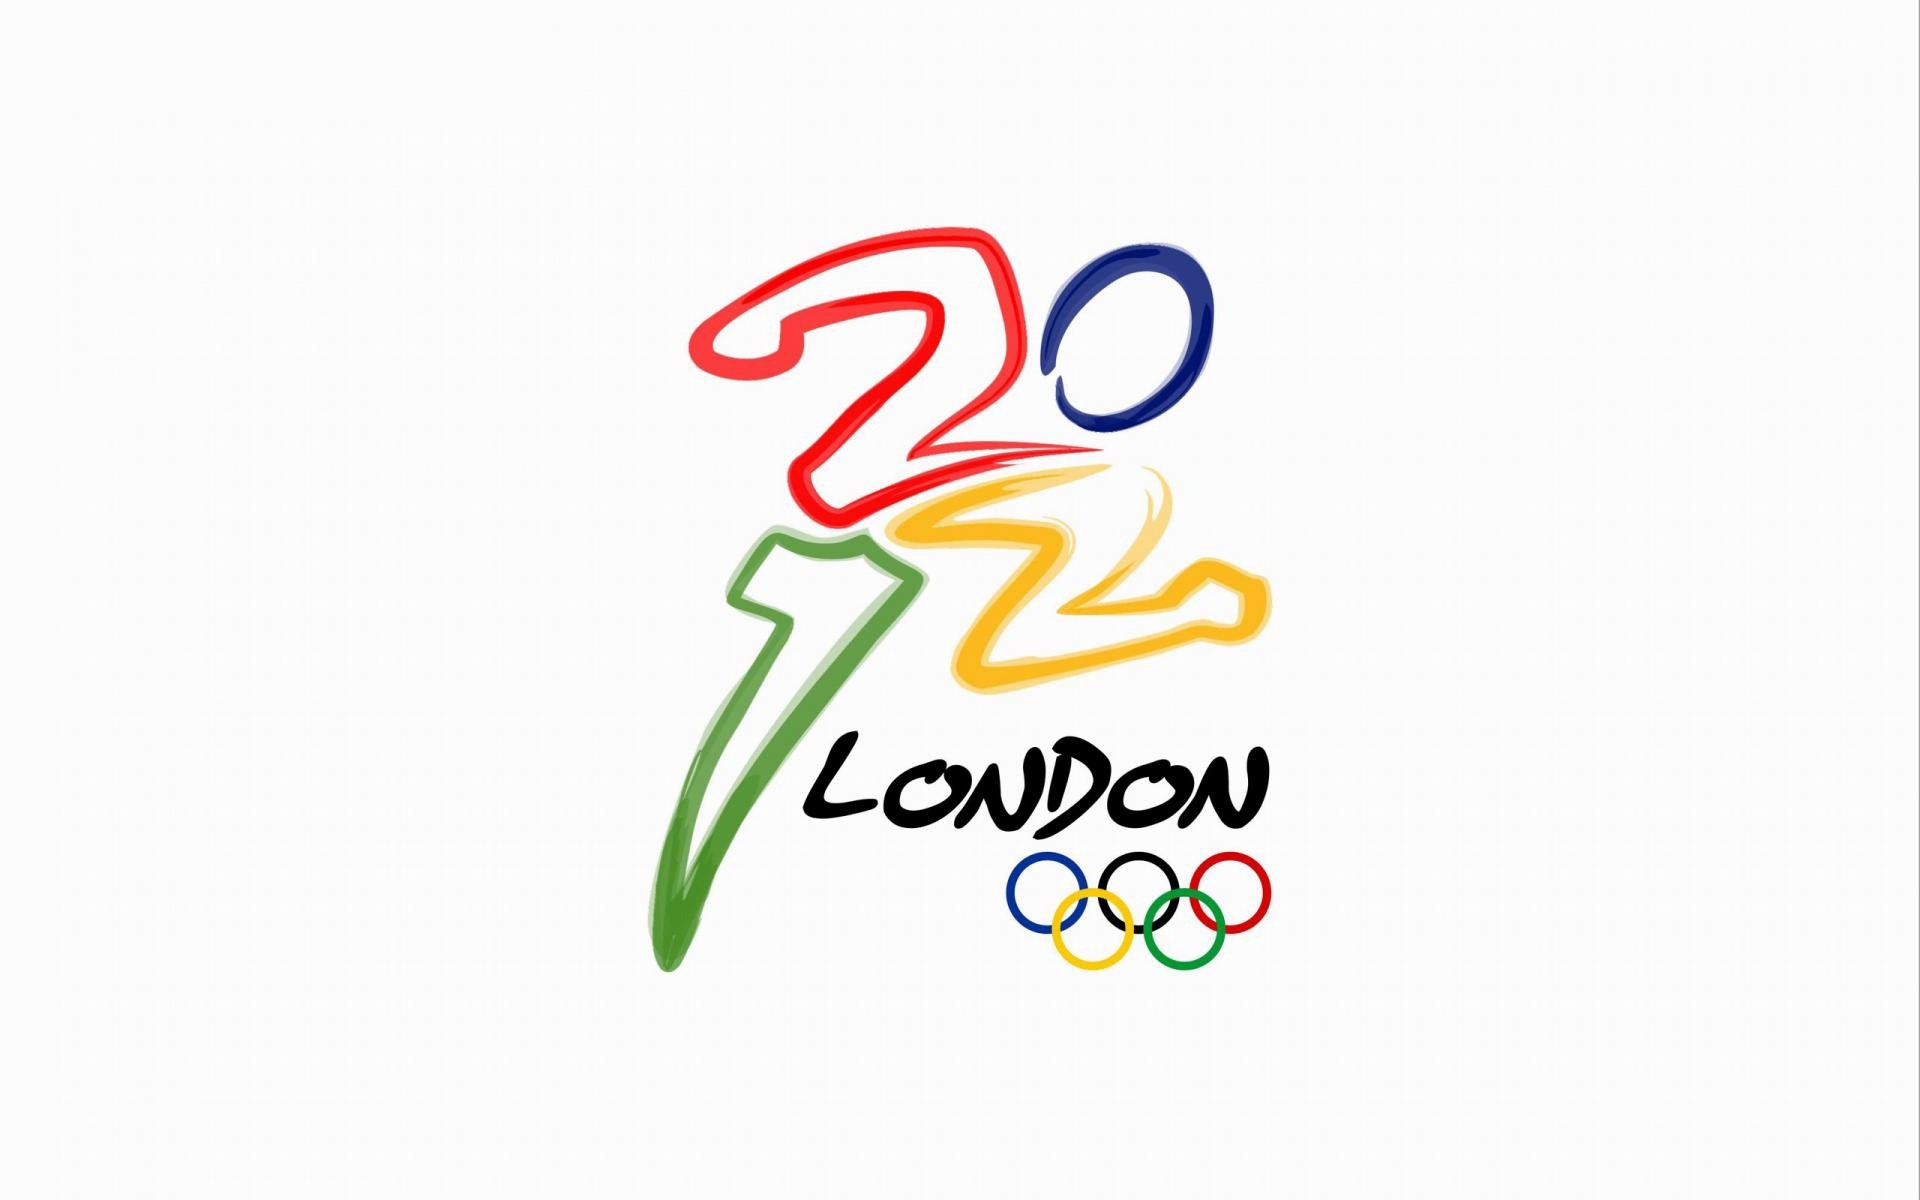 London 2012 Olympics theme wallpapers (2) #22 - 1920x1200